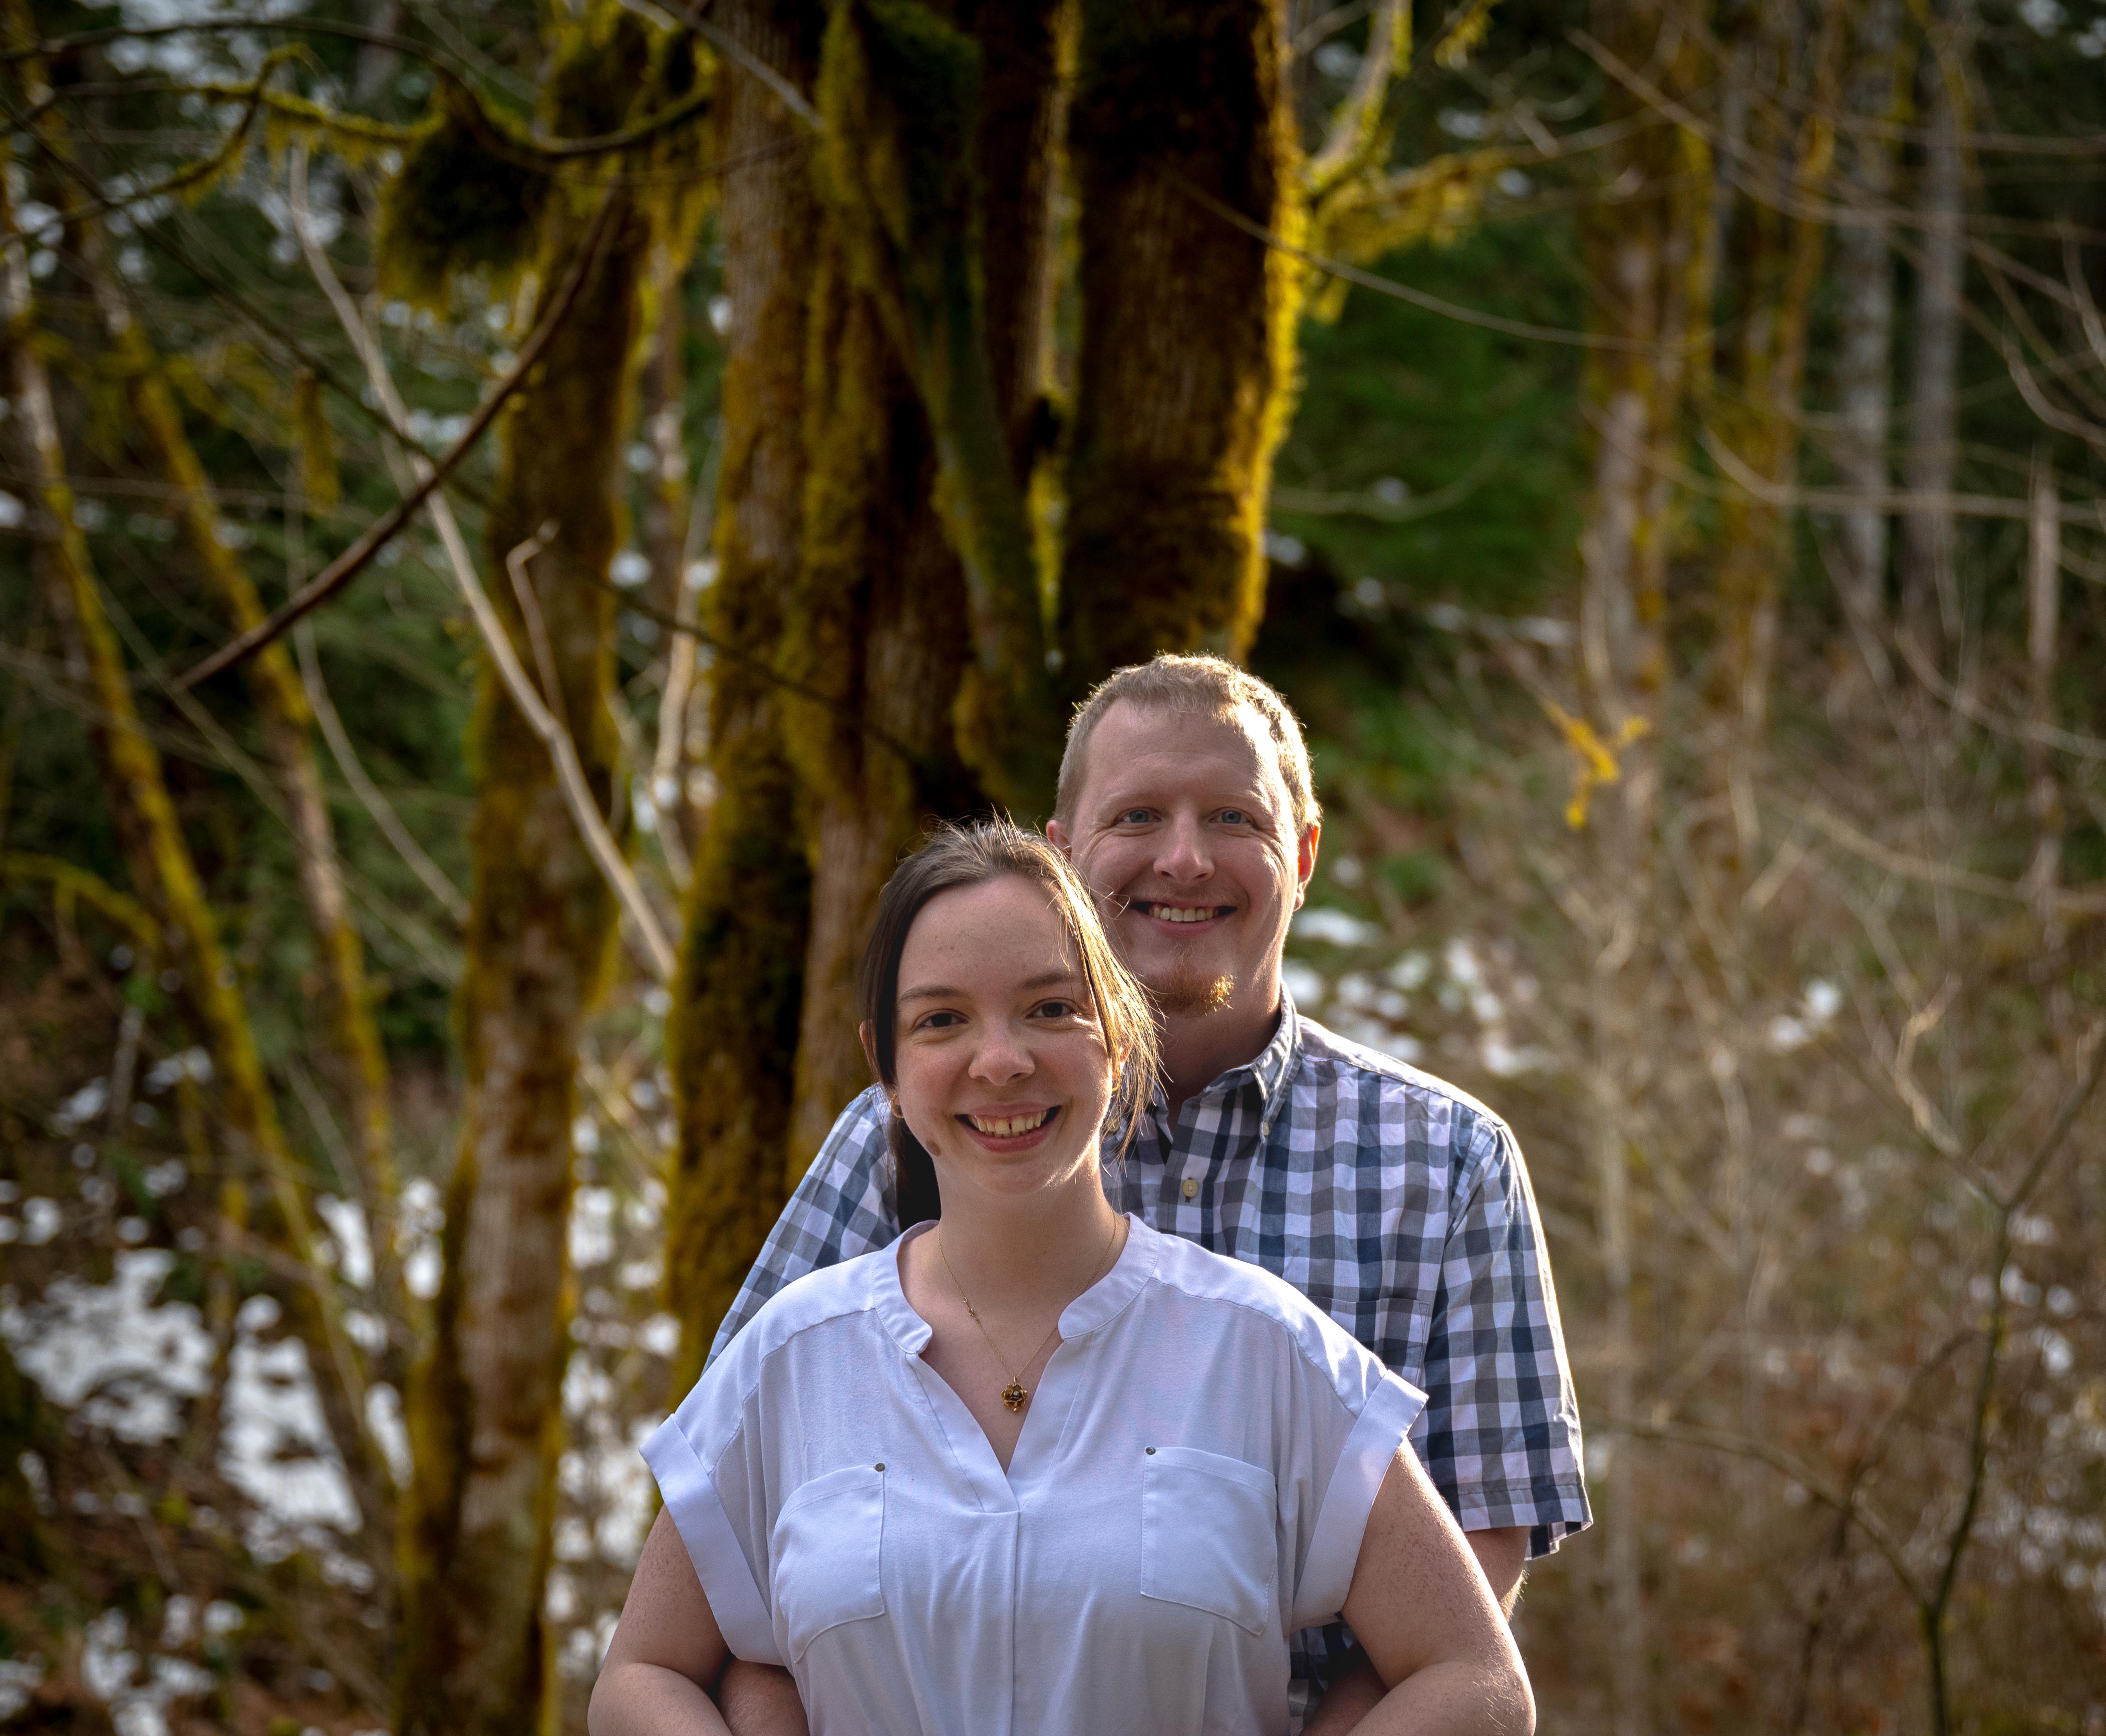 The Wedding Website of Zach Dahlen and Hannah Ames